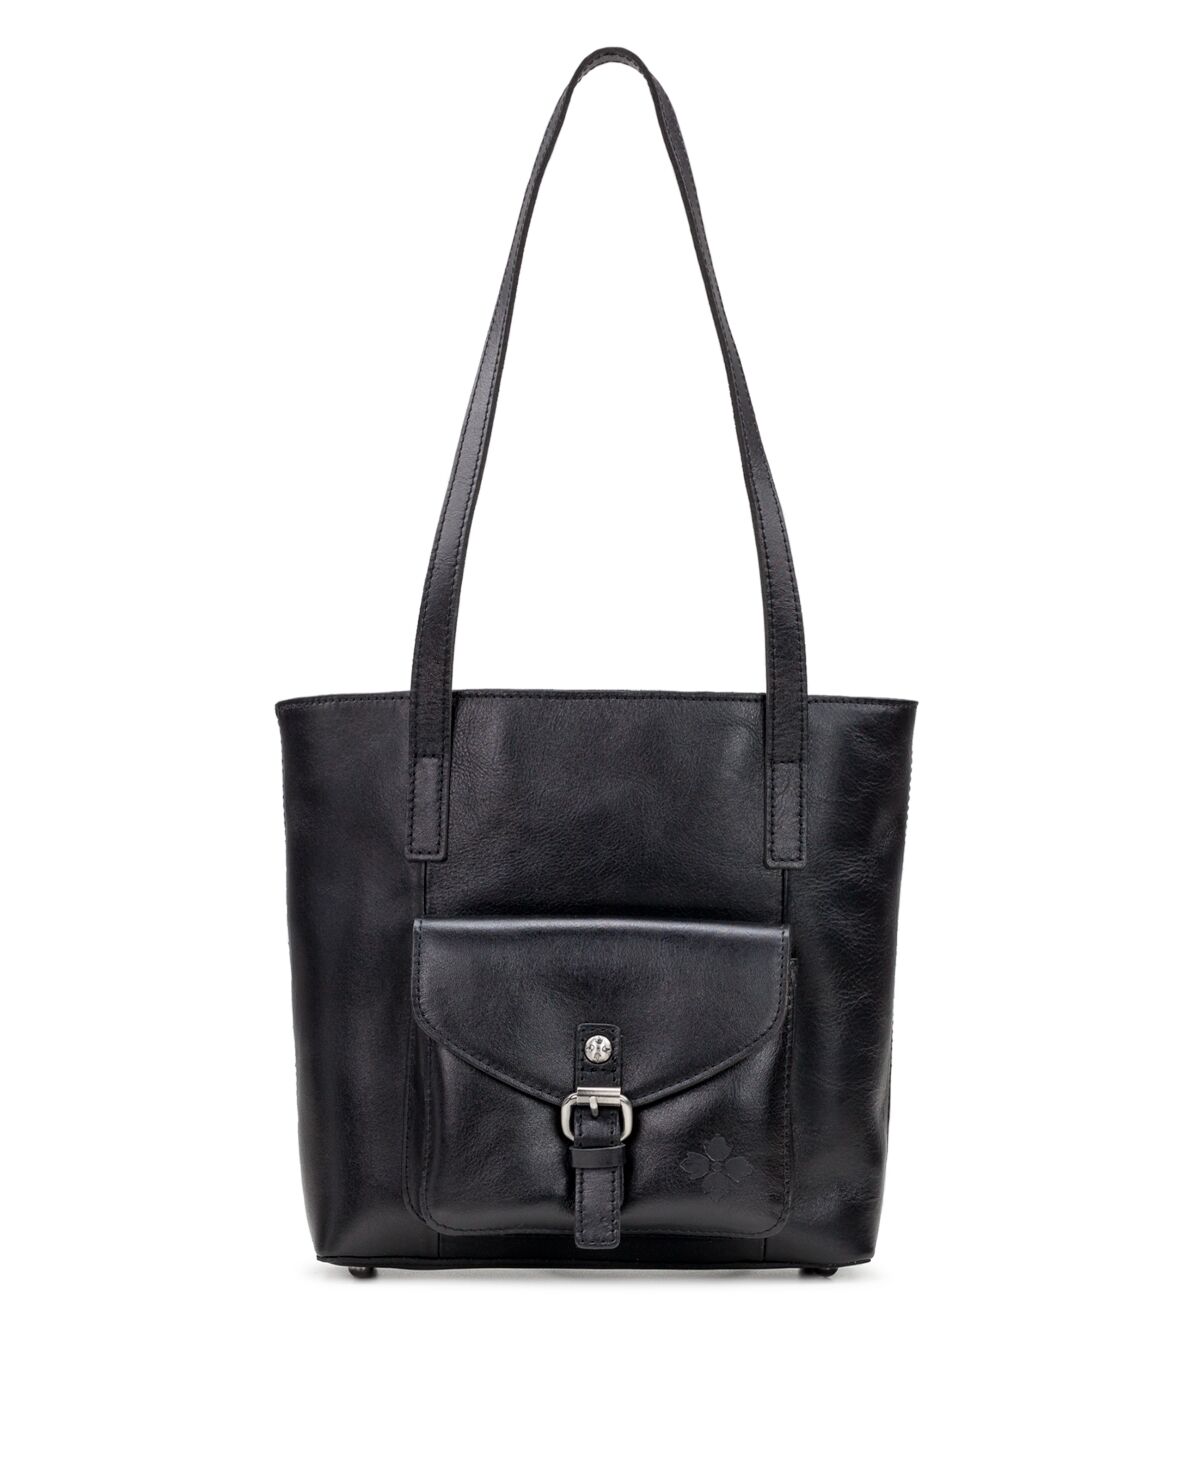 Patricia Nash Women's Banbury Tote Bag, Created for Macy's - Black